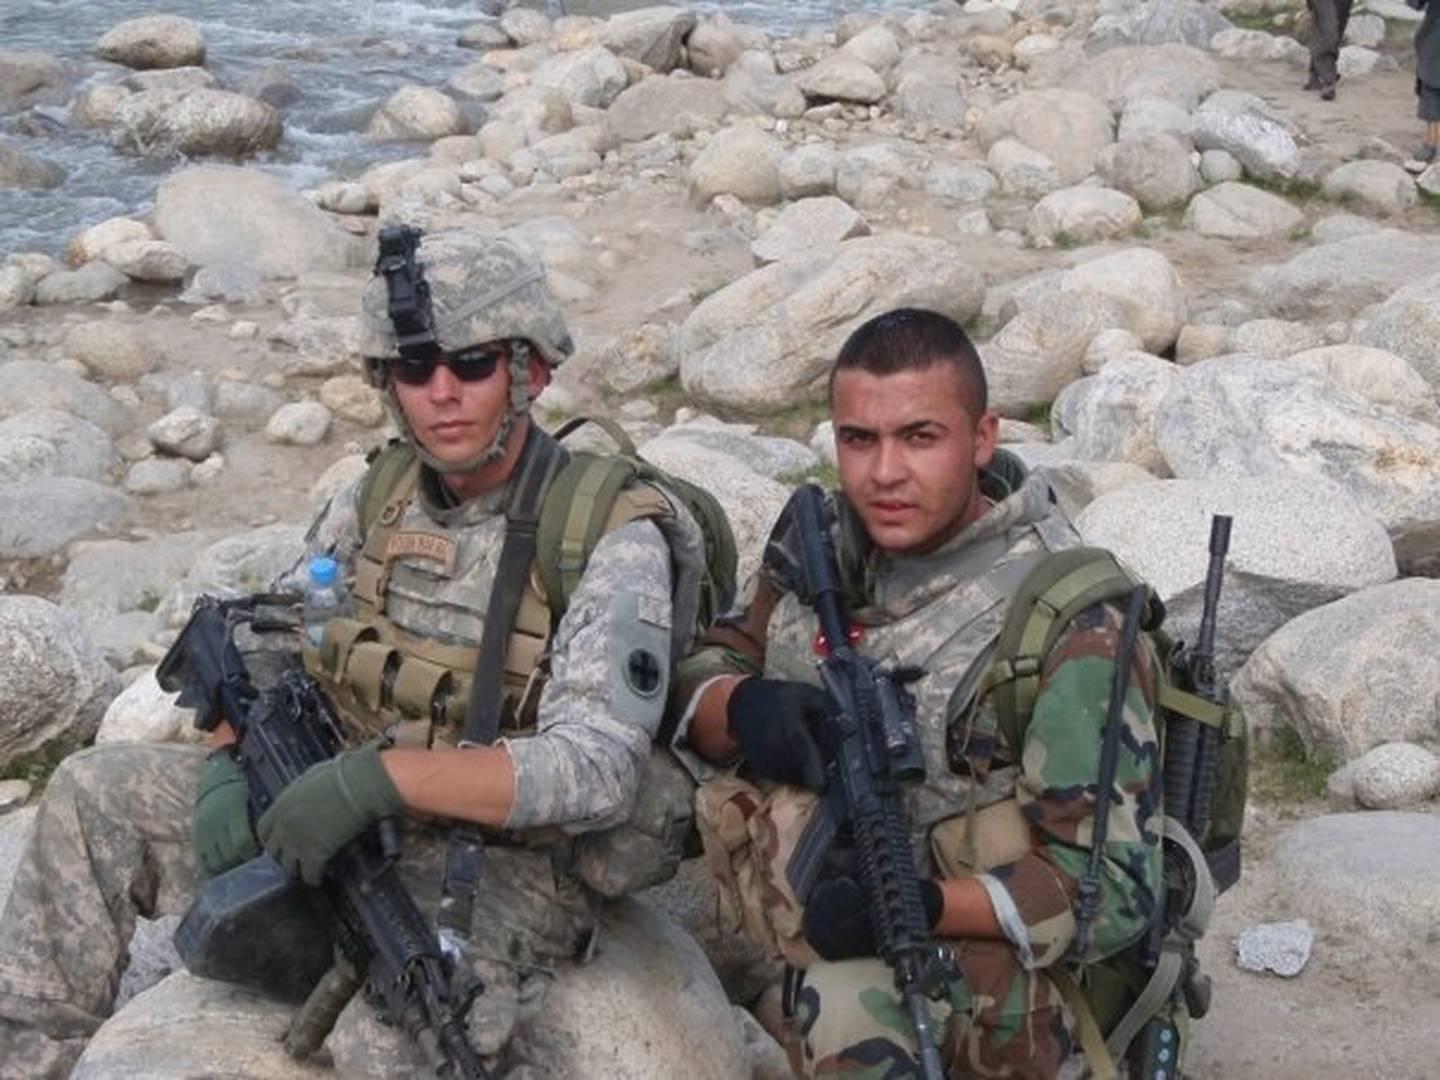 Marine Cpl. Jason Essazay on patrol with the Army in Afghanistan in 2008, taken while he was still working as an interpreter. (Cpl. Jason Essazay)